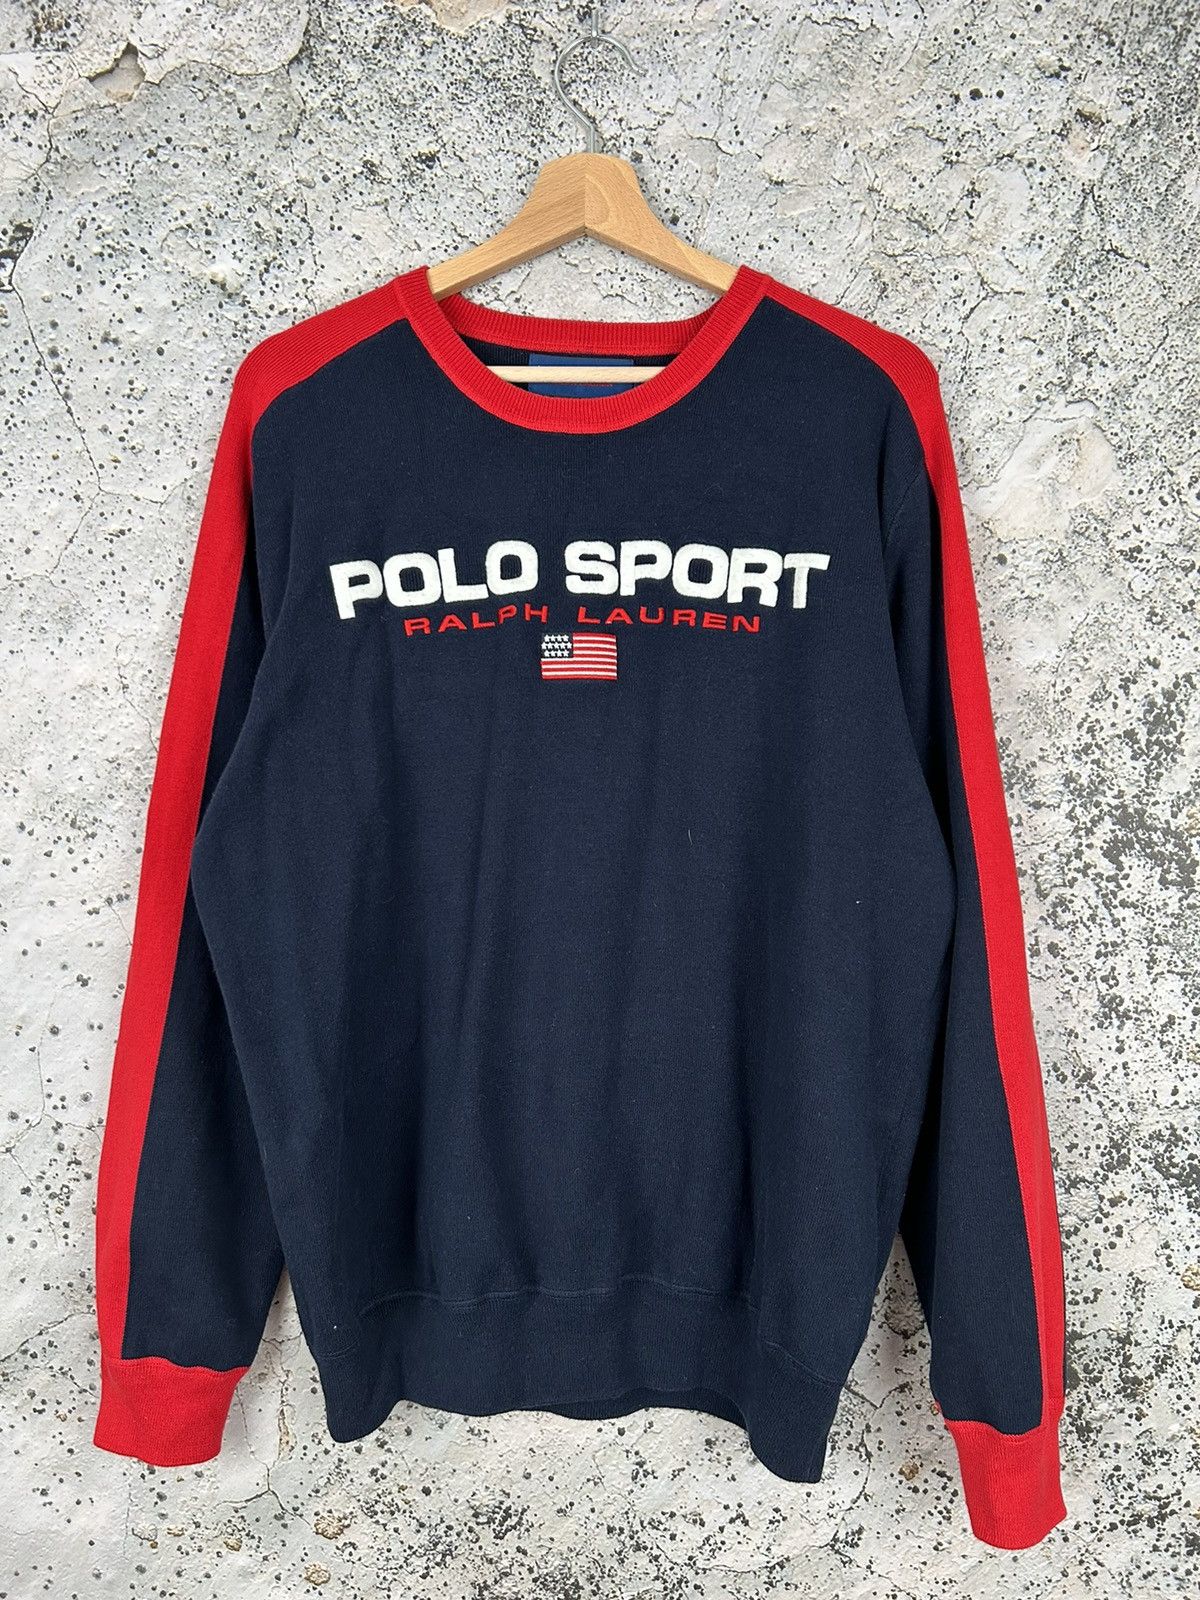 Polo Sport Ralph Lauren Vintage